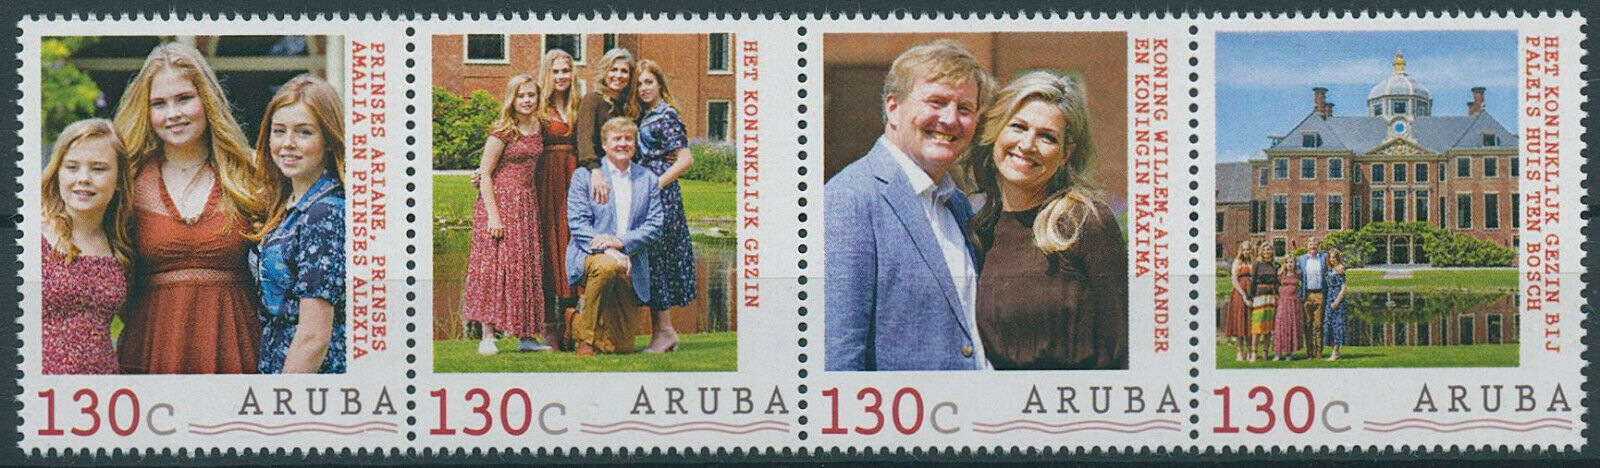 Aruba 2019 MNH Royalty Stamps King Willem-Alexander & Queen Maxima 4v Strip